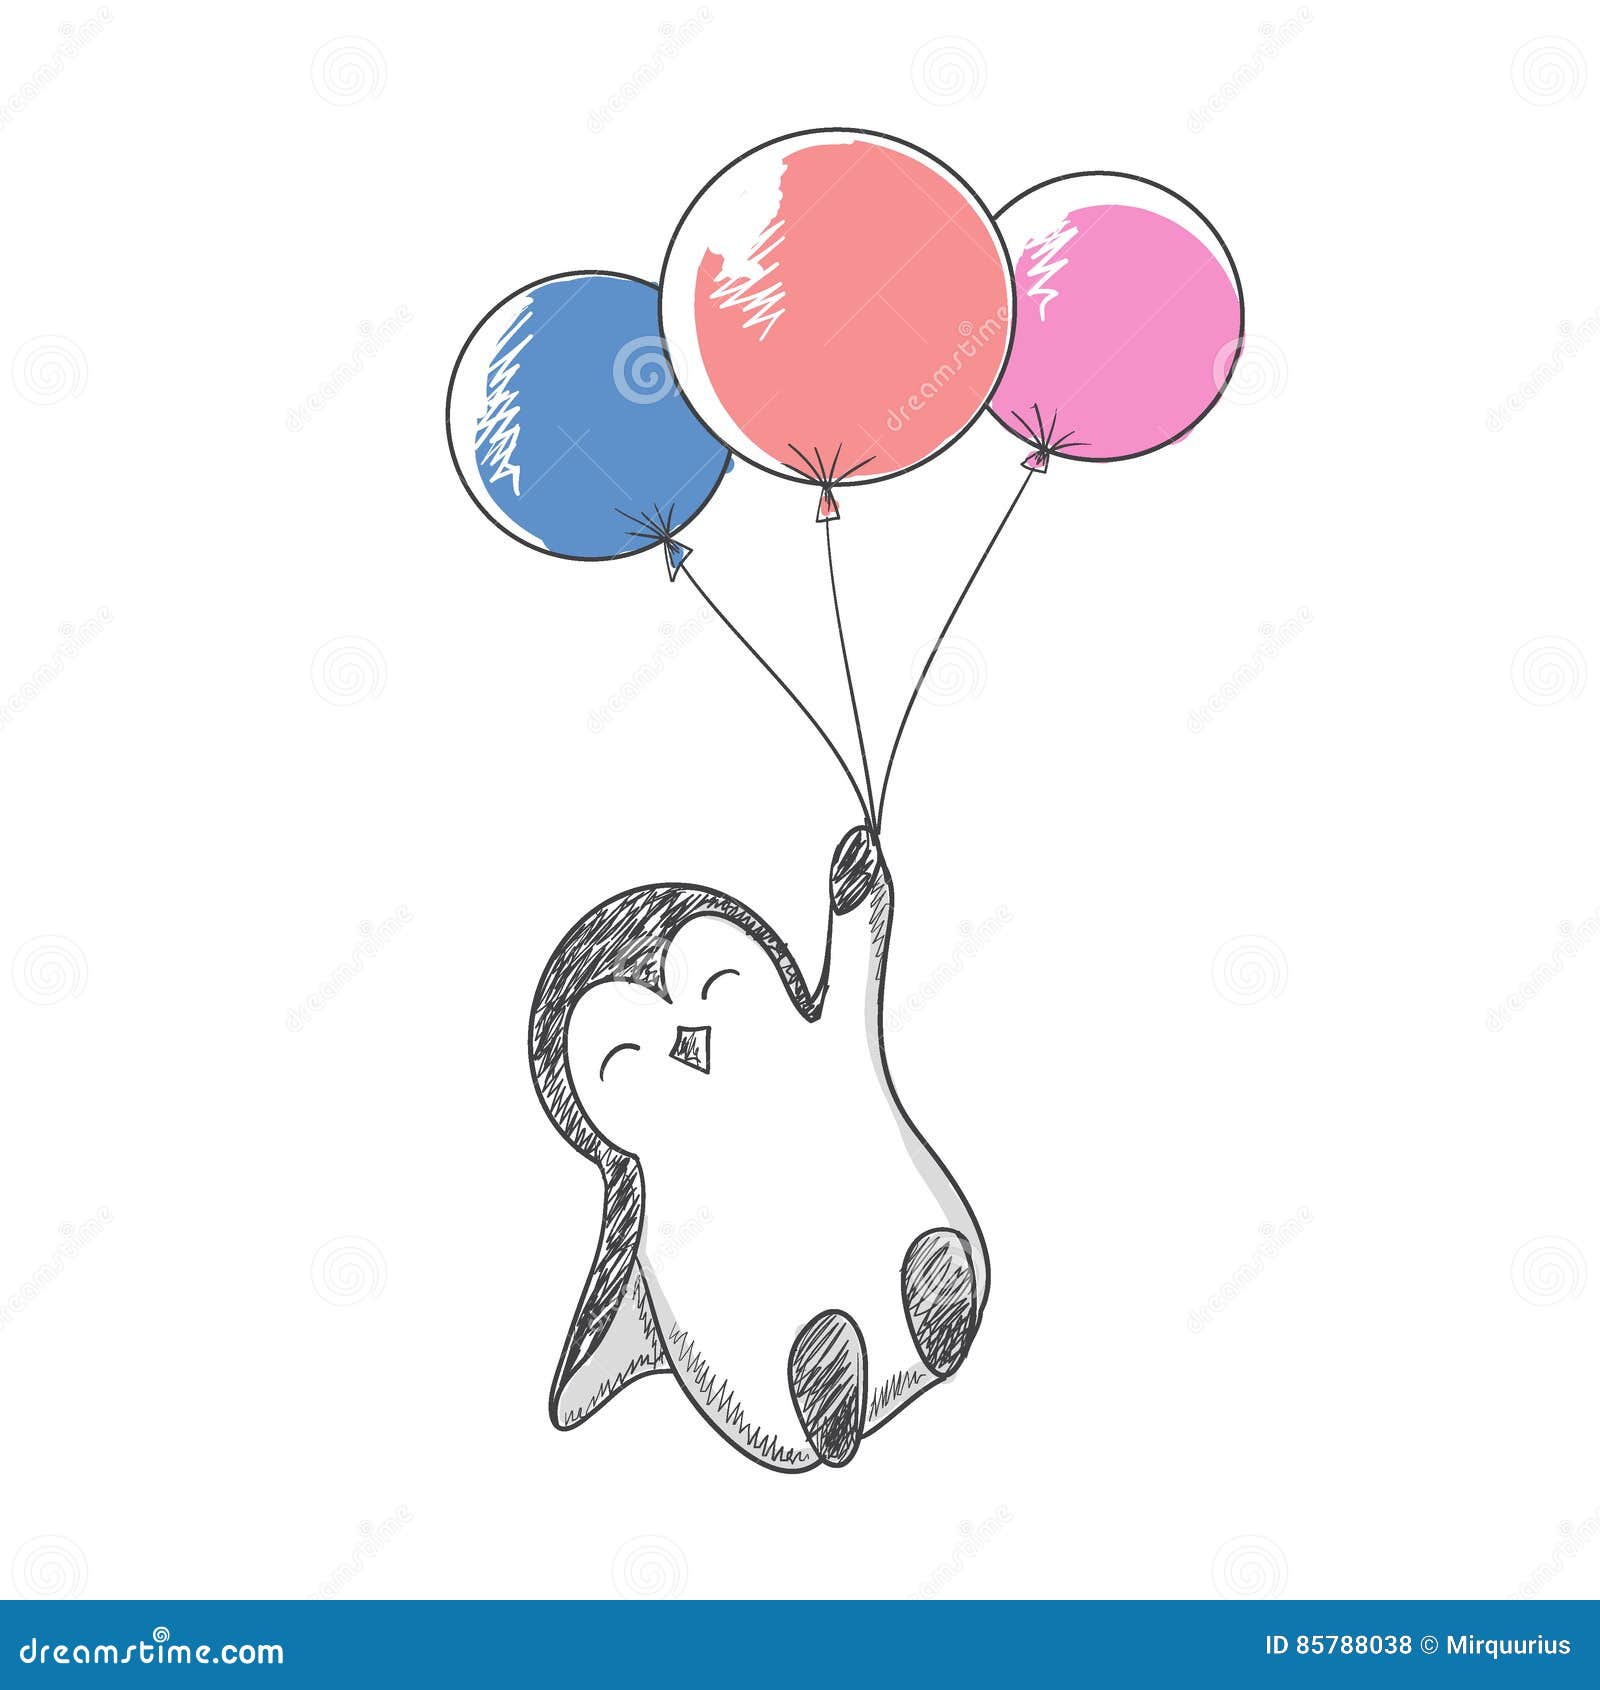 506 Penguin Balloons Stock Illustrations, Vectors & Clipart